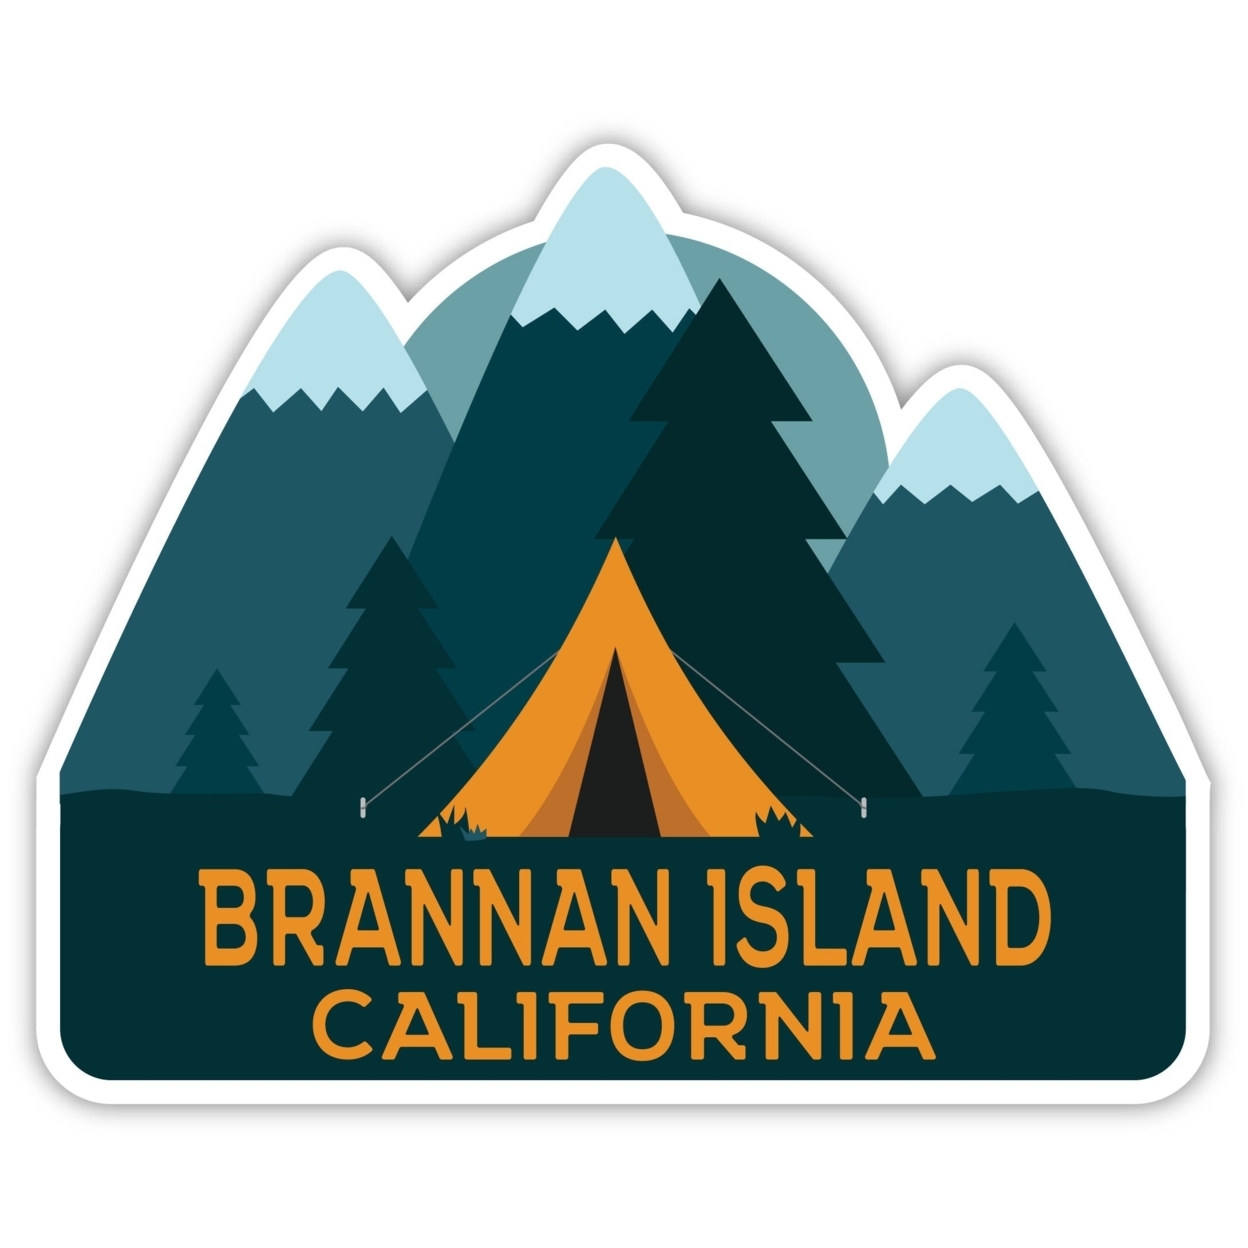 Brannan Island California Souvenir Decorative Stickers (Choose Theme And Size) - 4-Pack, 12-Inch, Adventures Awaits